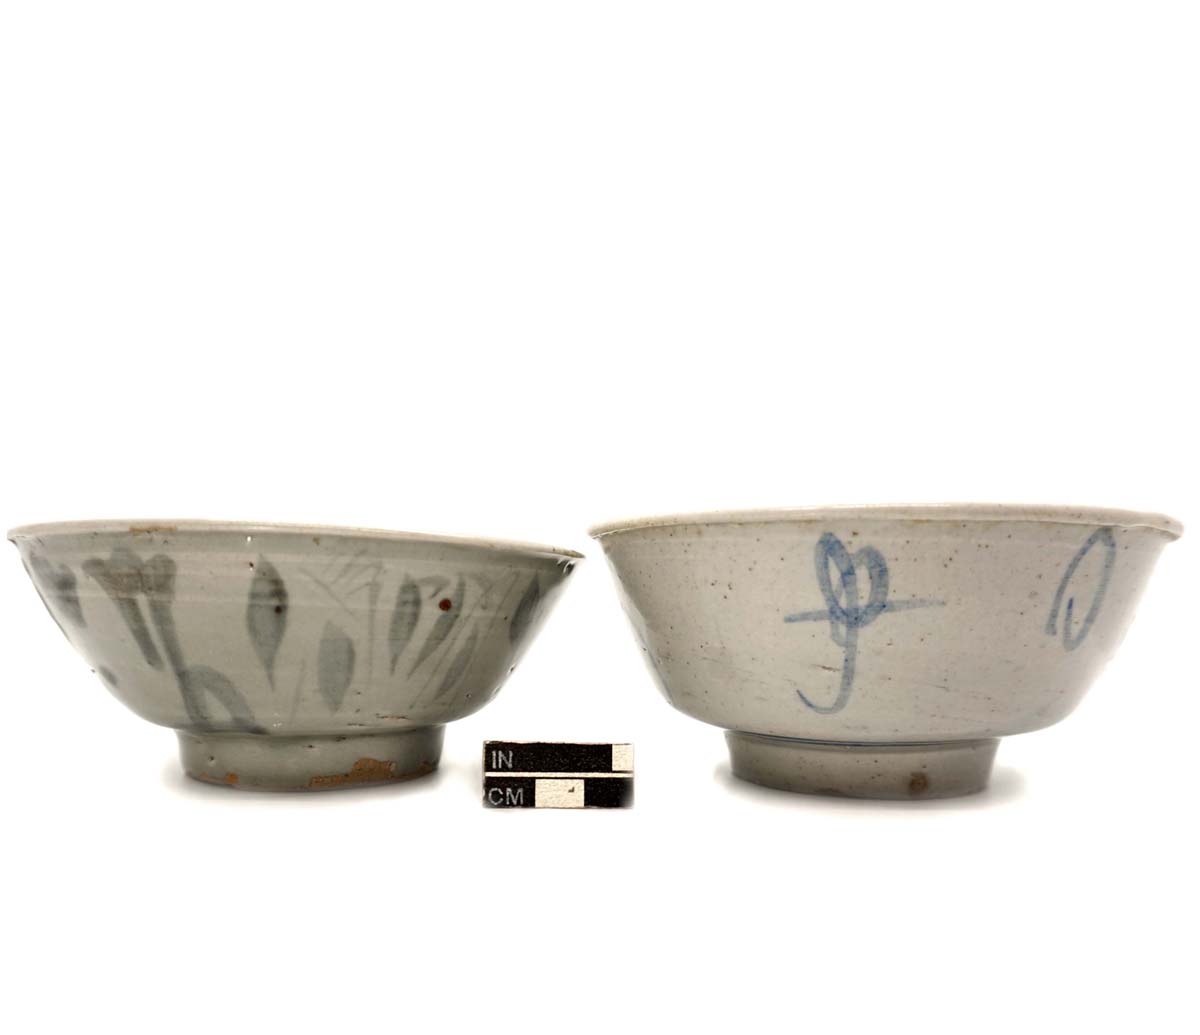 Rice bowls, "Bamboo" pattern, porcelaneous stoneware.